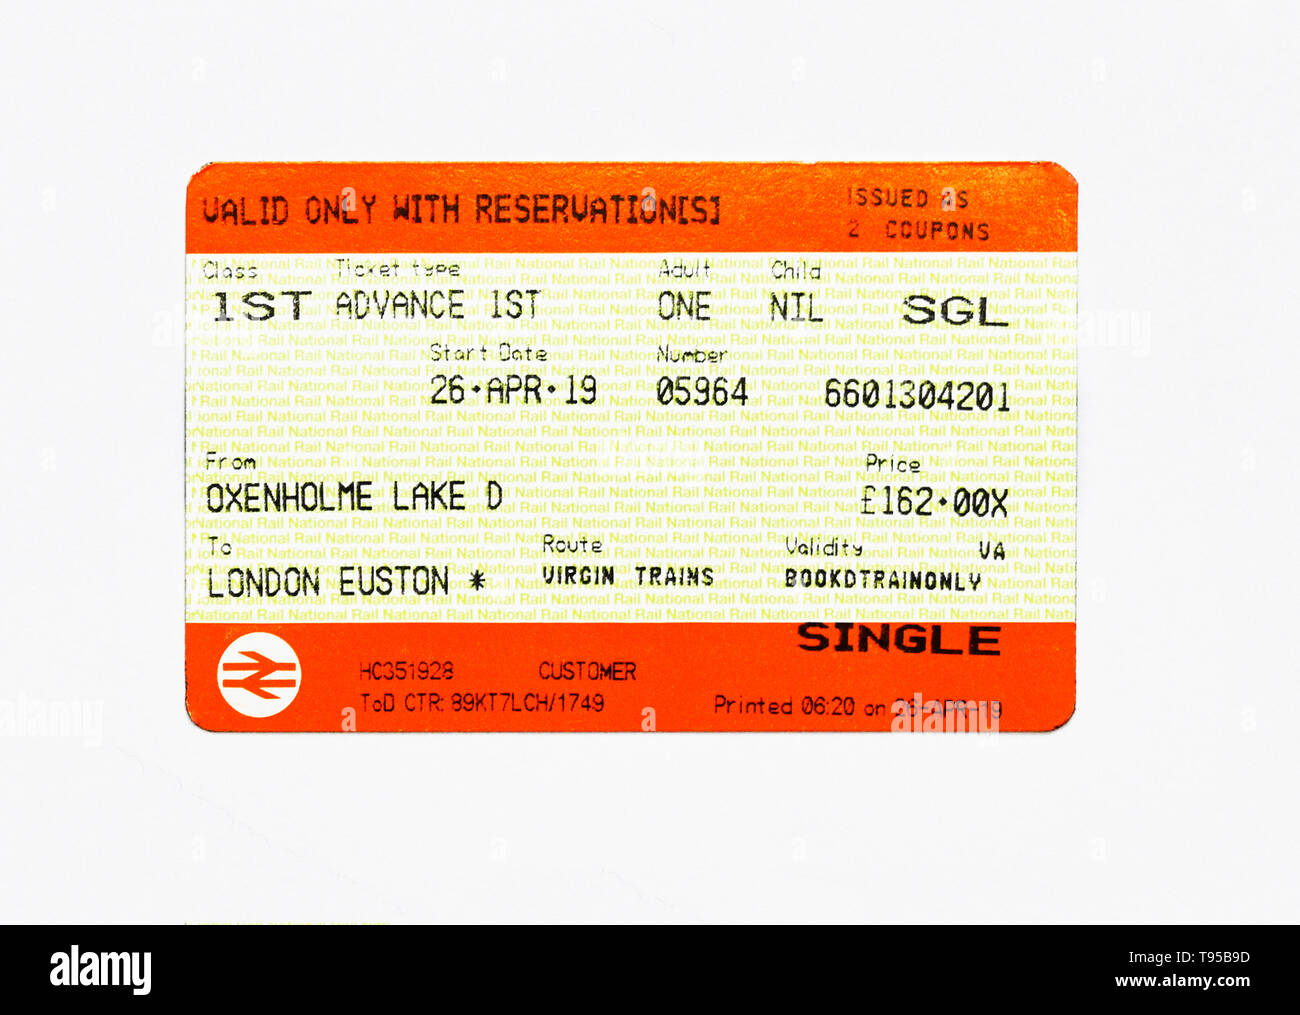 Vereinigtes Königreich Fahrkarte. Oxenholme Lake District zu London Euston. 1 st. Klasse. Nach. Vorauszahlung 1 st. Single. Virgin Trains. Preis £ 162.00. Stockfoto